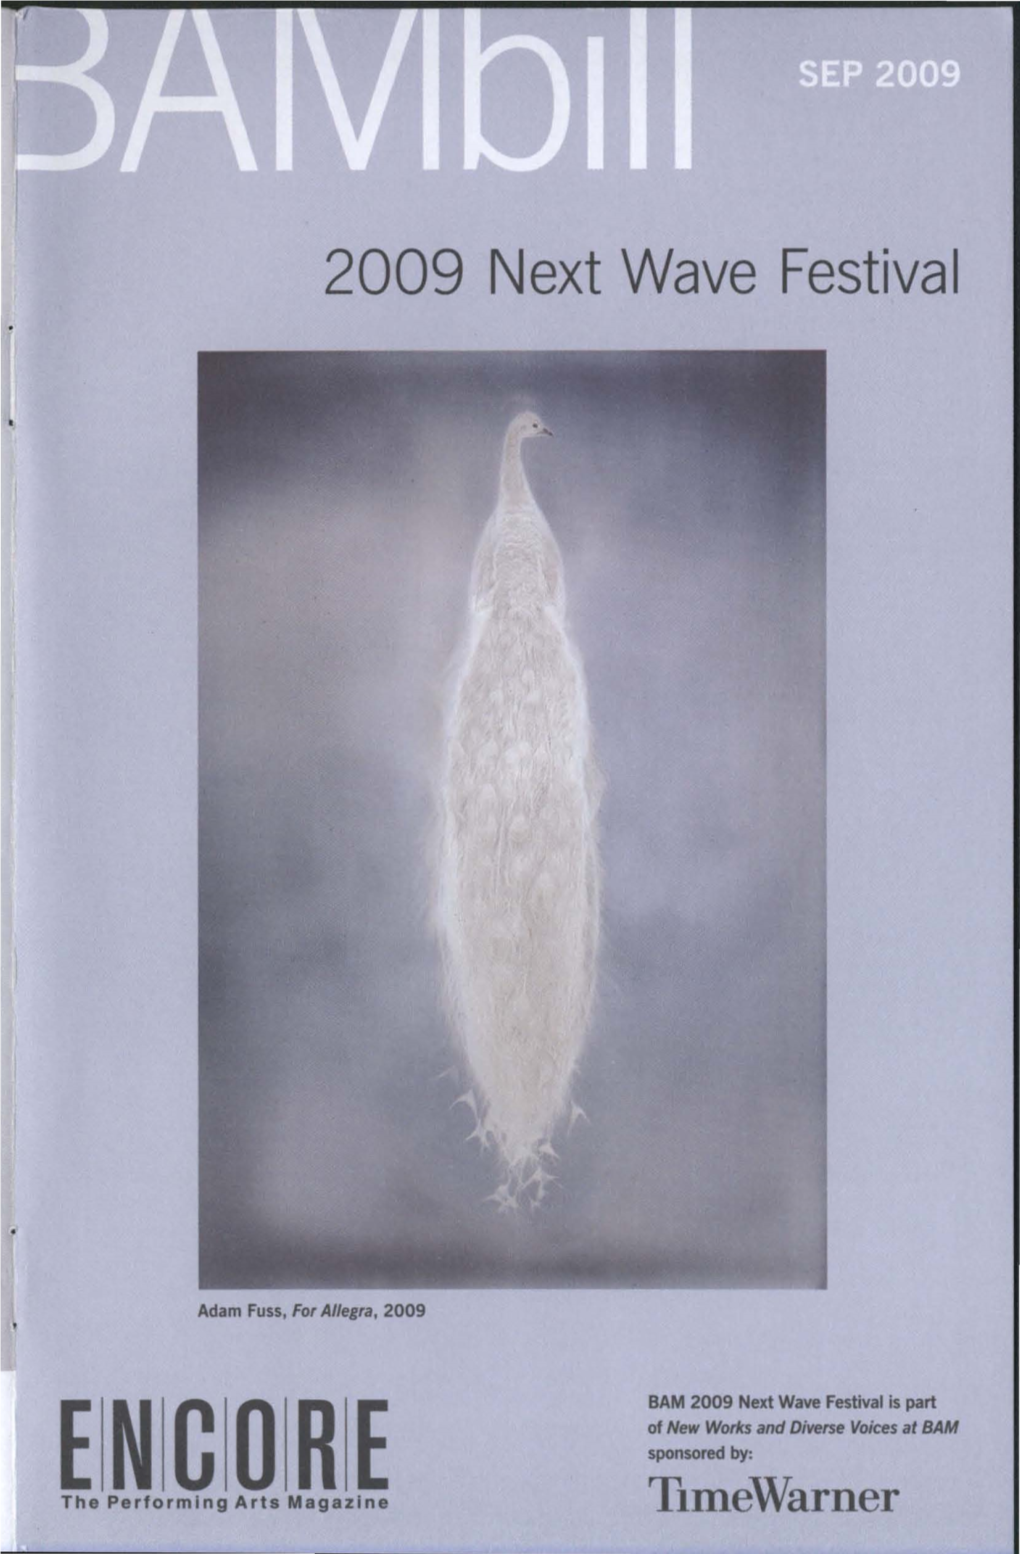 Encorethe Performing Arts Magazine Tlmewarner I ~Ambill Sep 2009 Contents